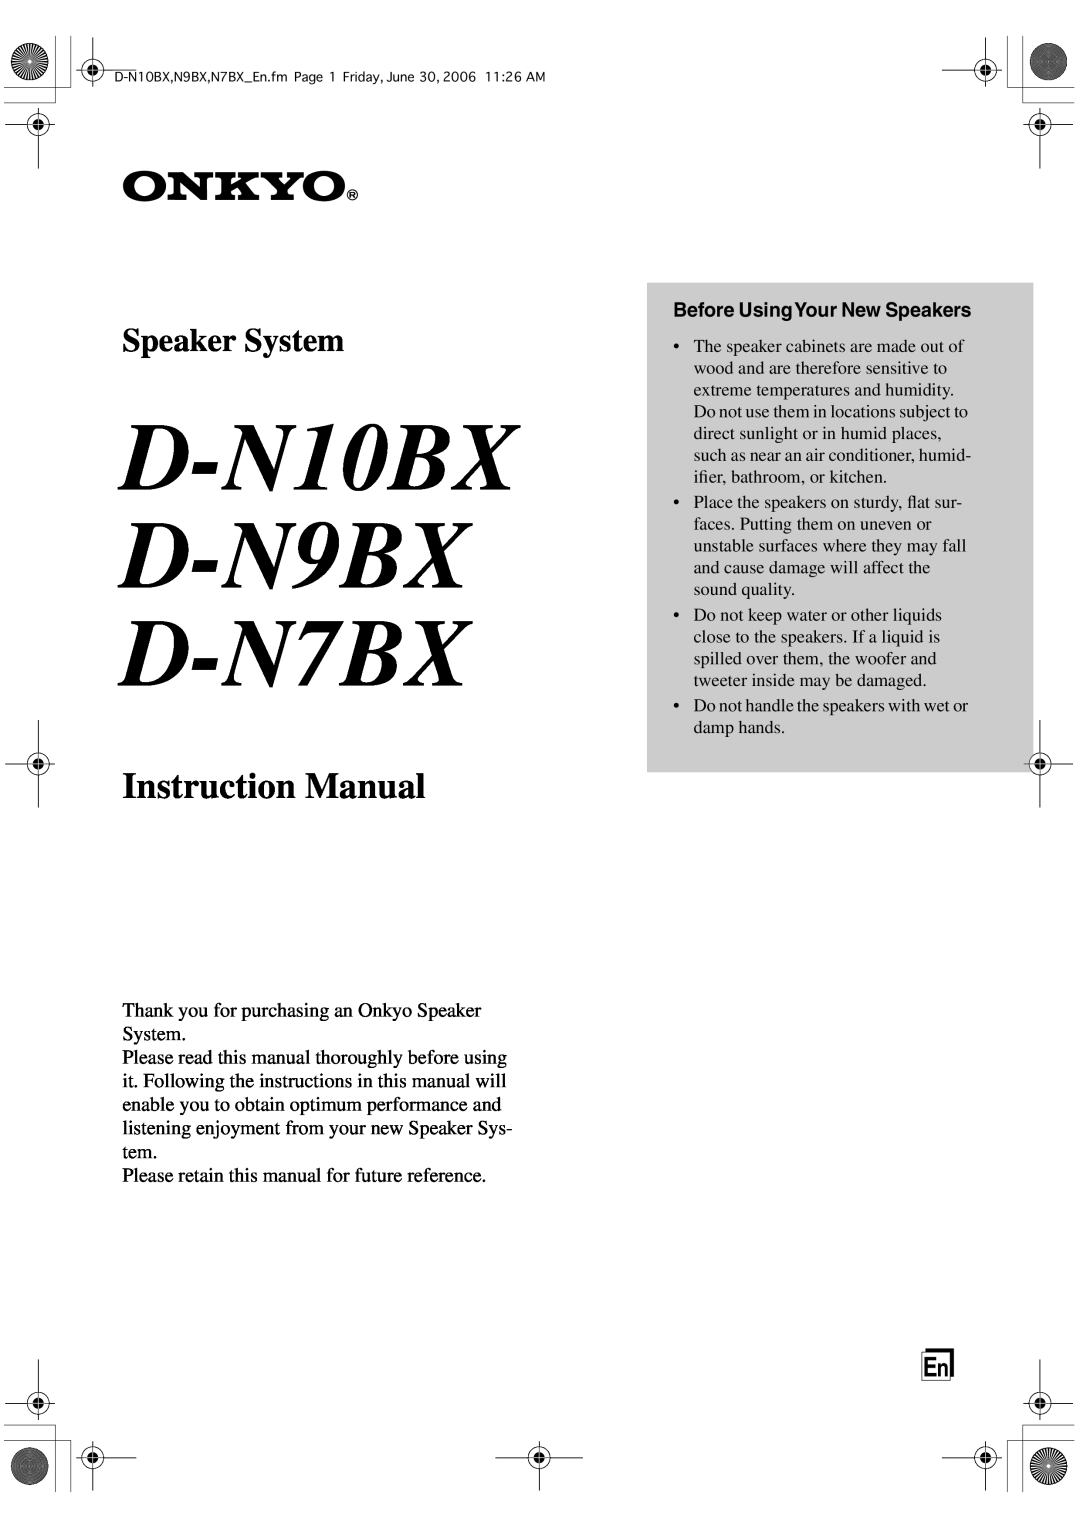 Onkyo instruction manual D-N10BX D-N9BX D-N7BX, Thank you for purchasing an Onkyo Speaker System 